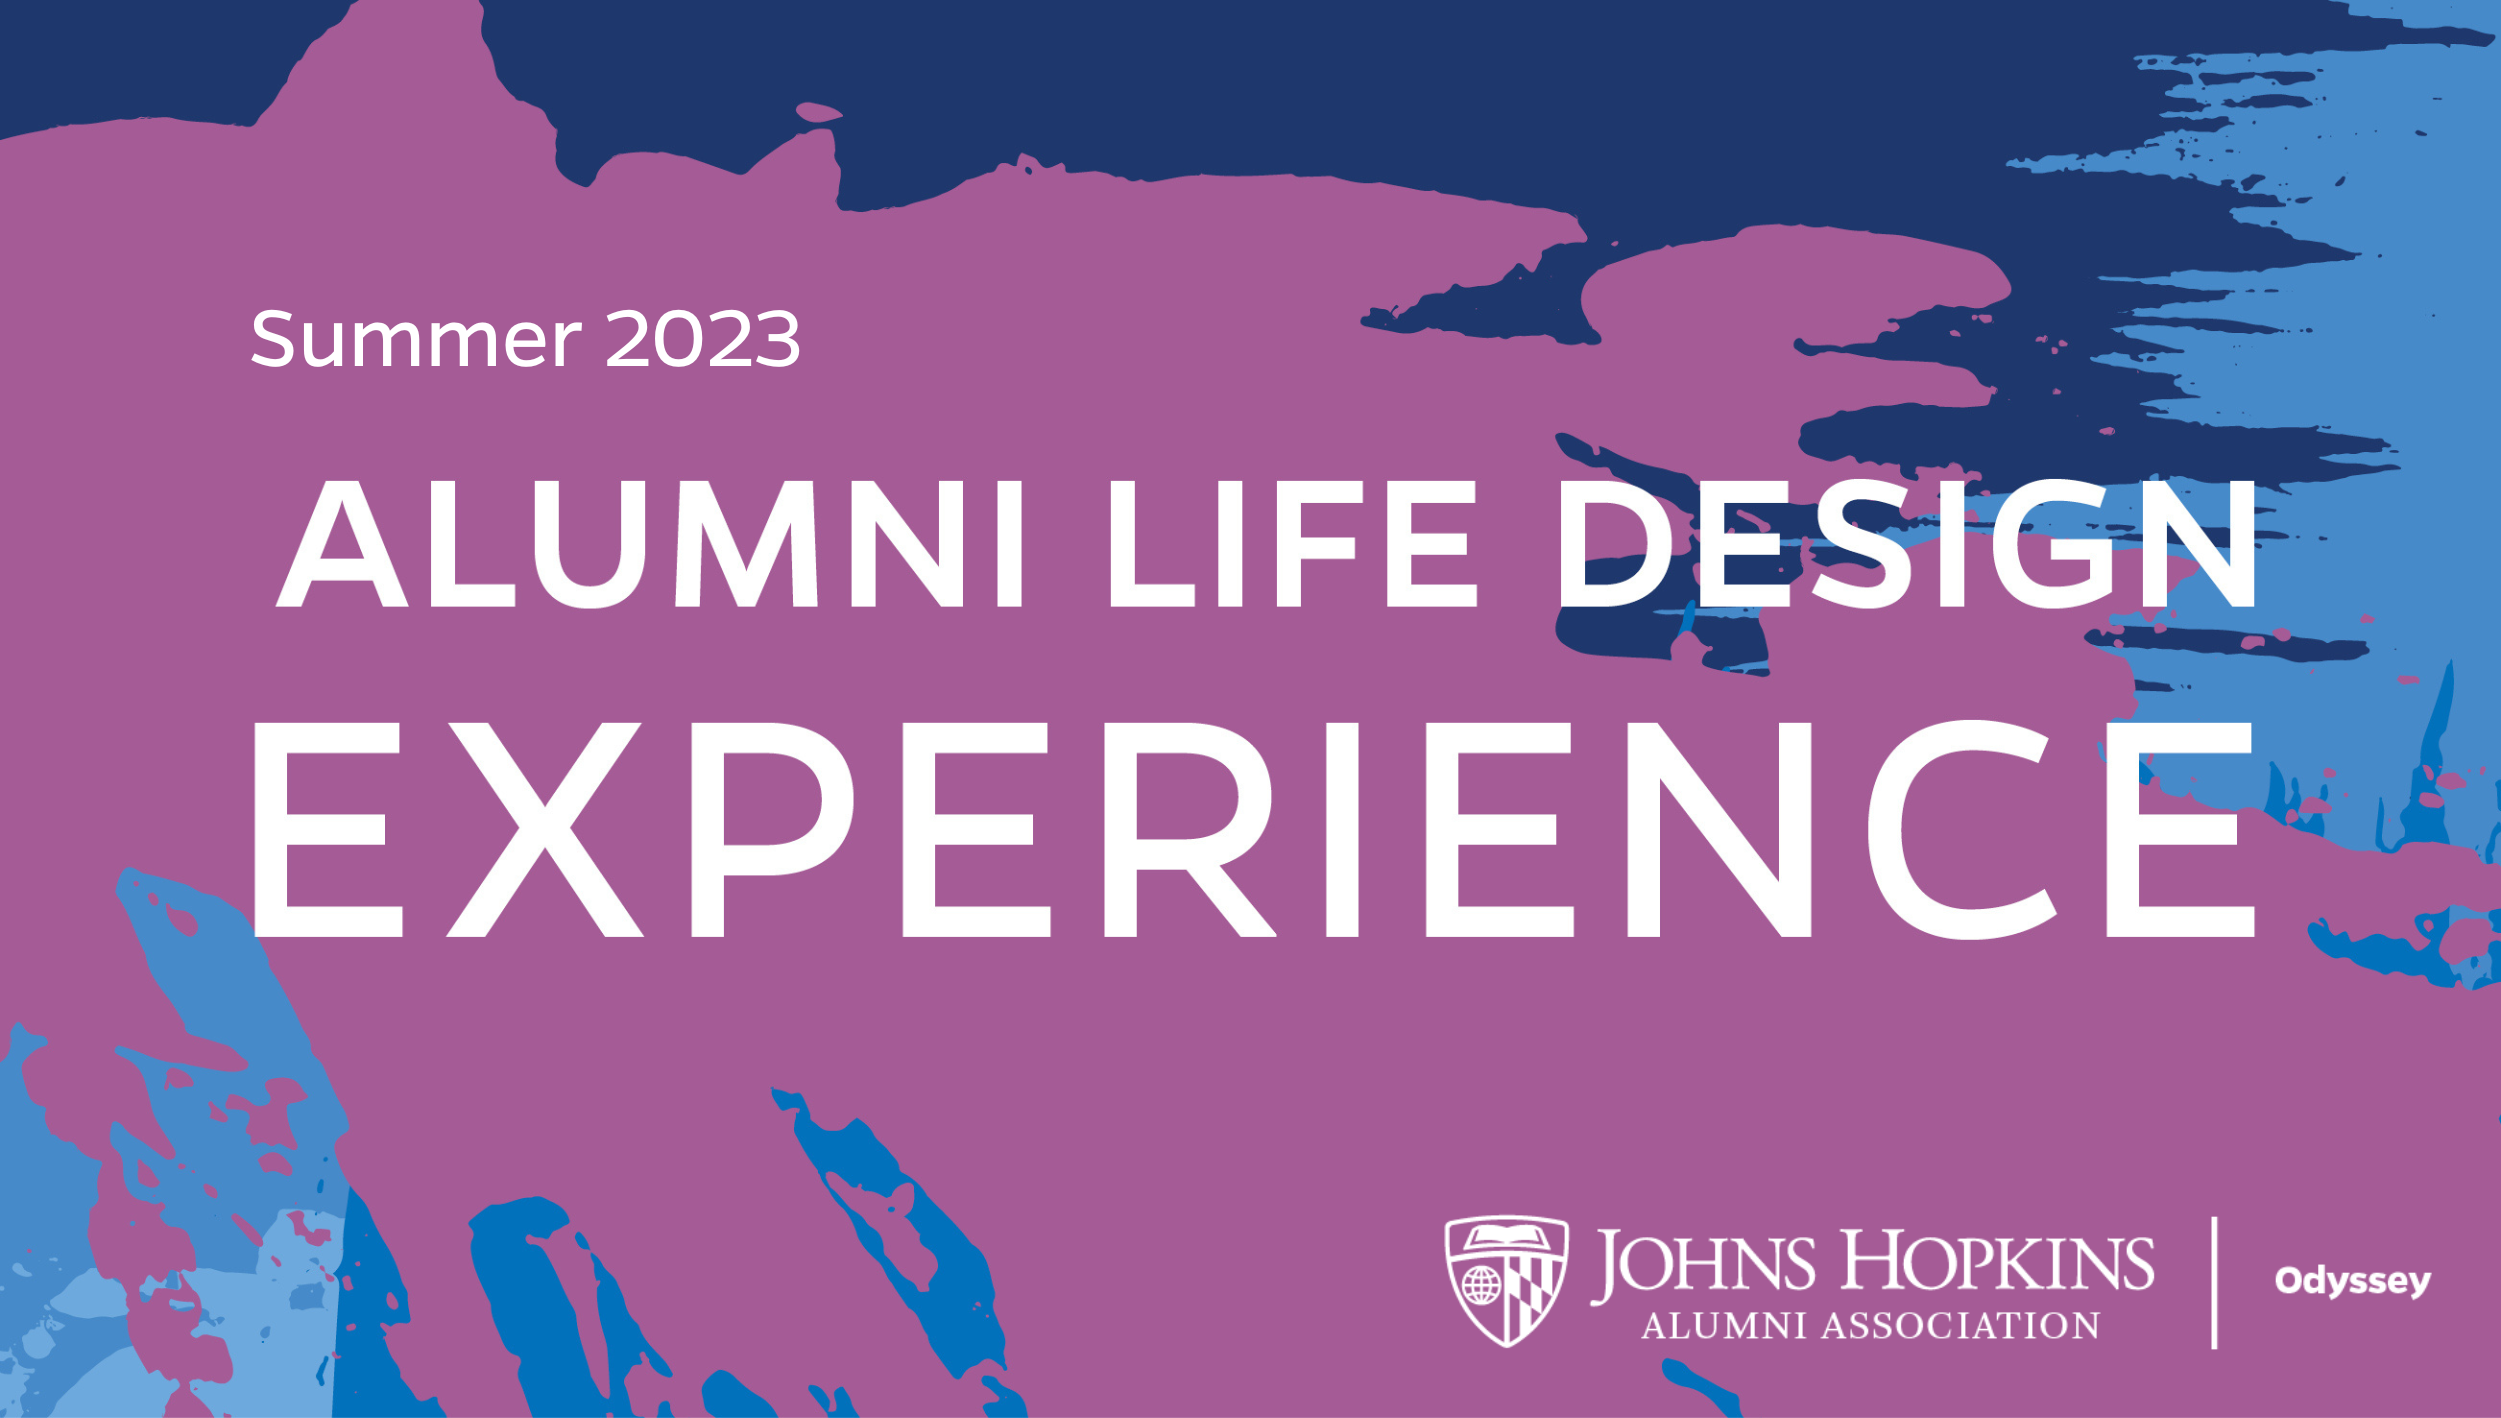 Alumni Life Design Experience written over a paint splatter background